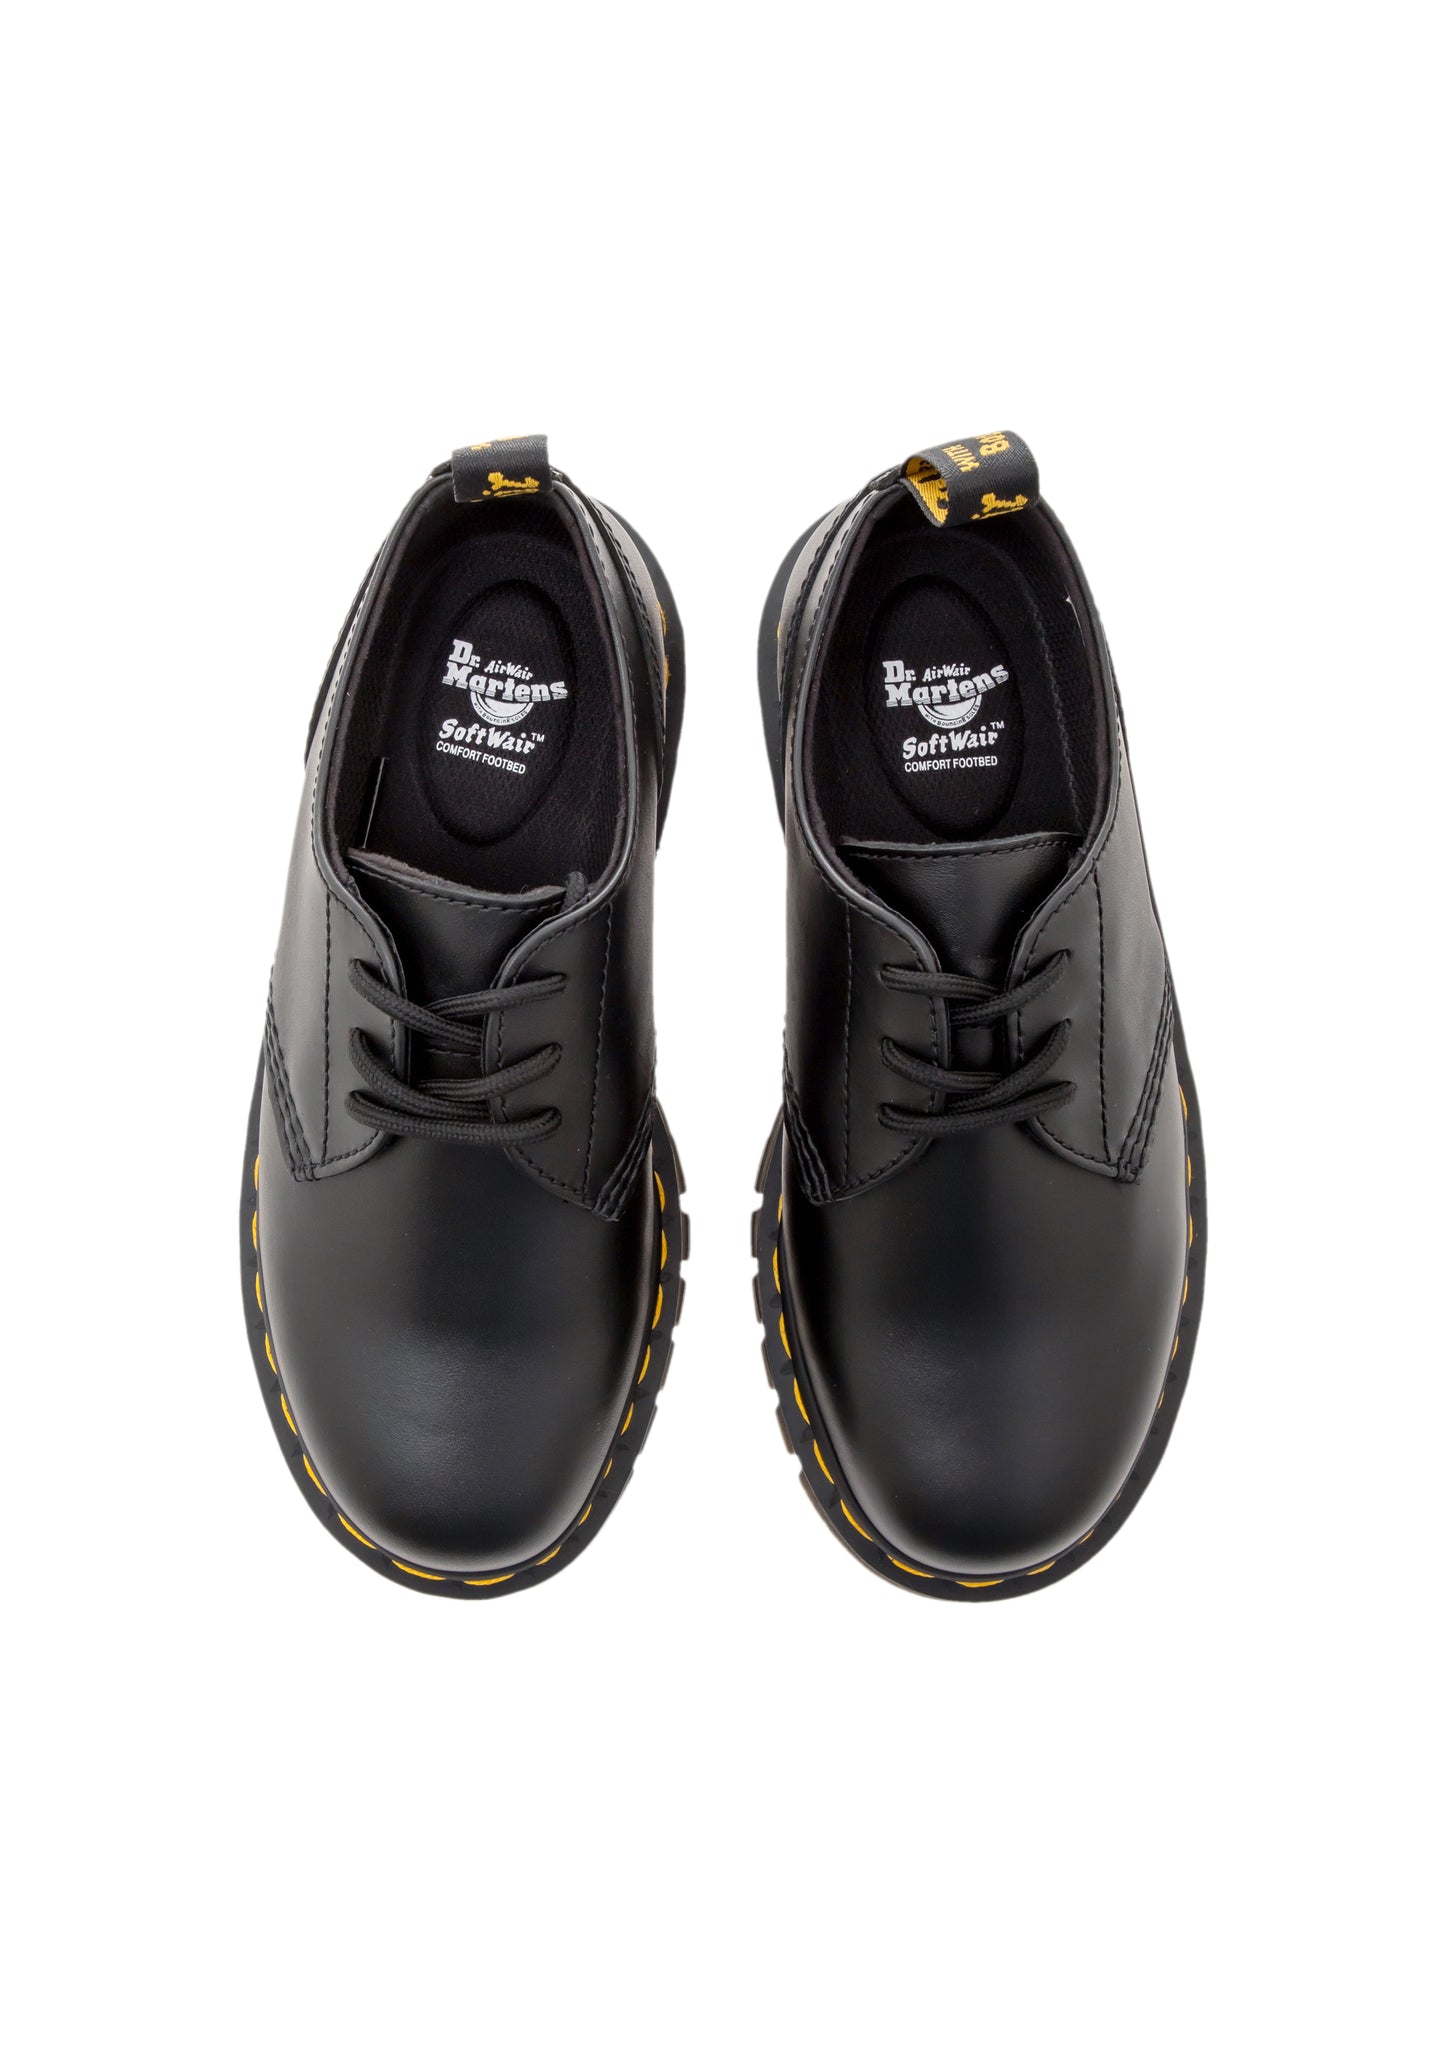 Audrick 3 Eye Shoes Nappa Lux black | Bildmaterial bereitgestellt von SHOES.PLEASE.